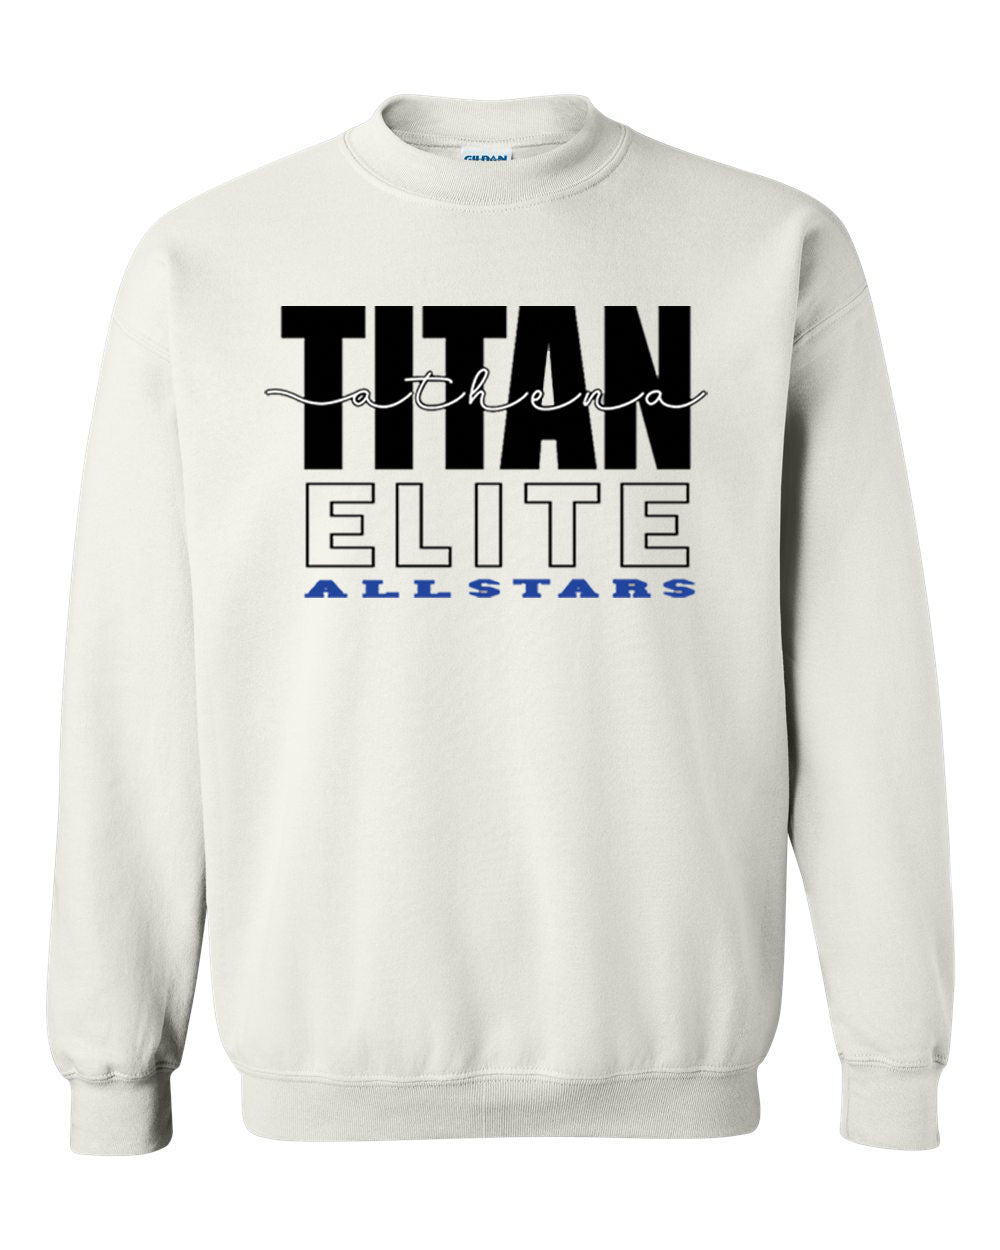 Titan Elite Design 16 non hooded sweatshirt